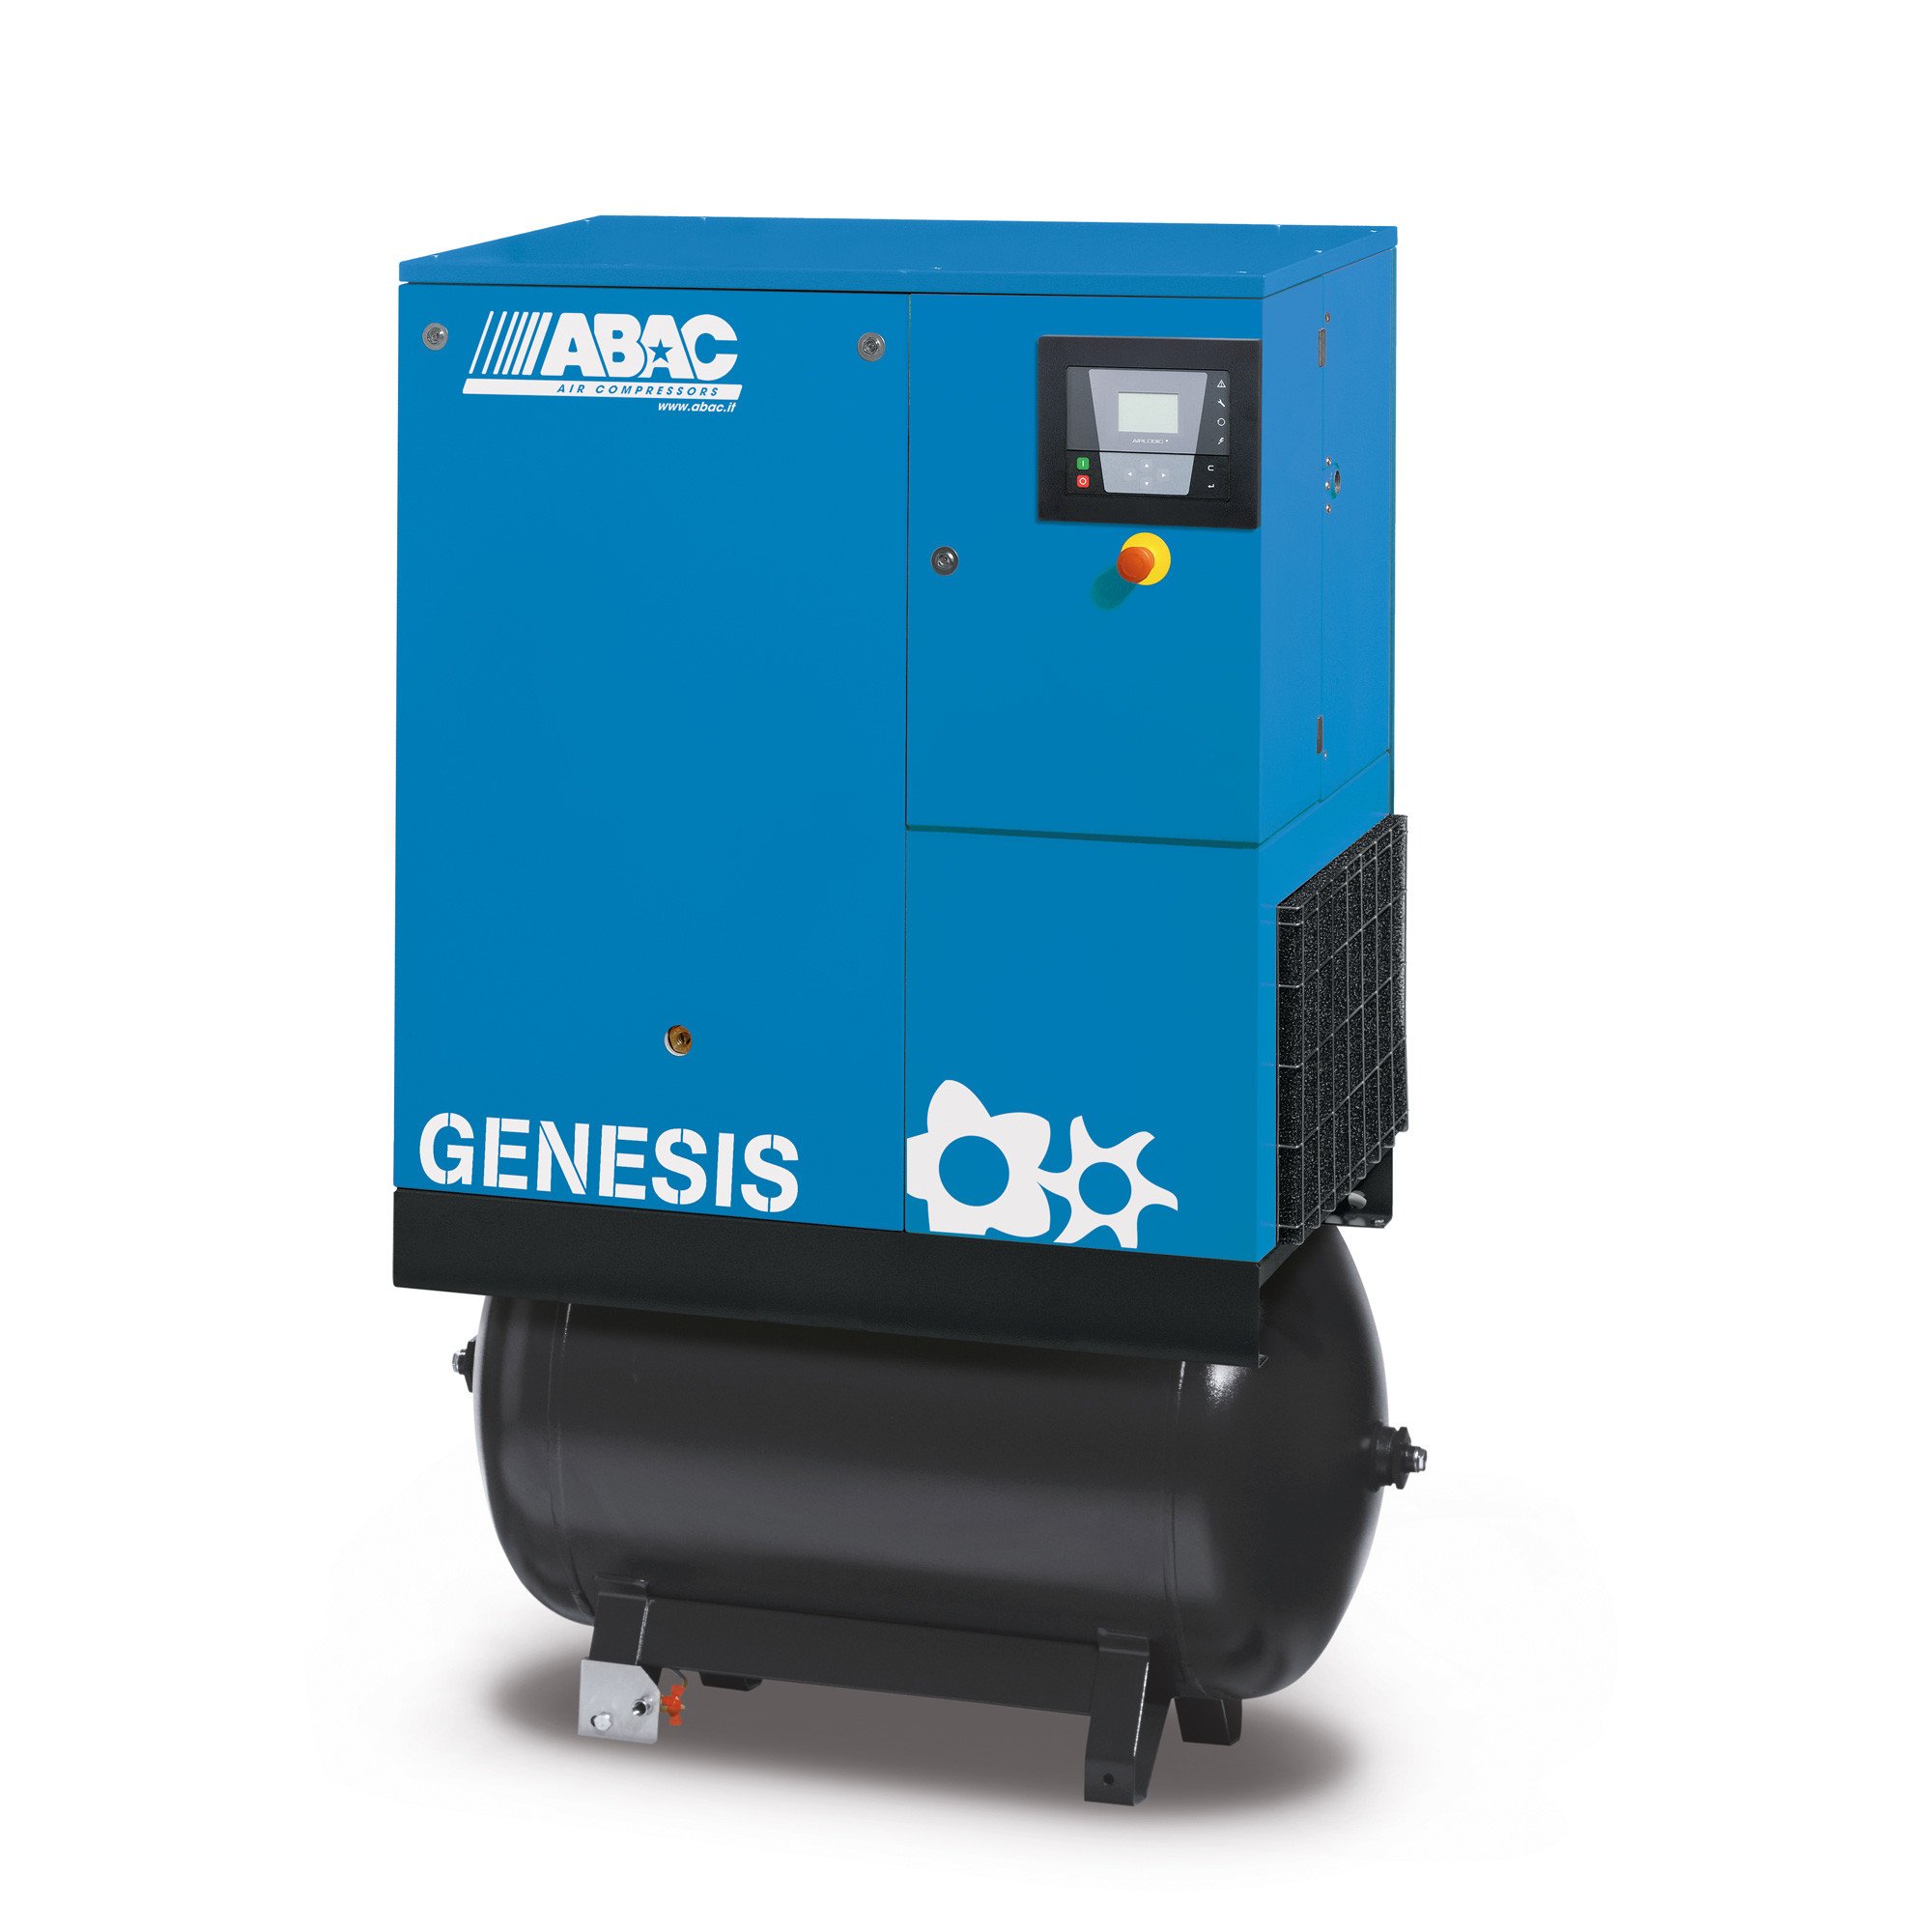 ABAC Genesis 270L, 52.7 CFM, 11千瓦固定转速螺杆空压机